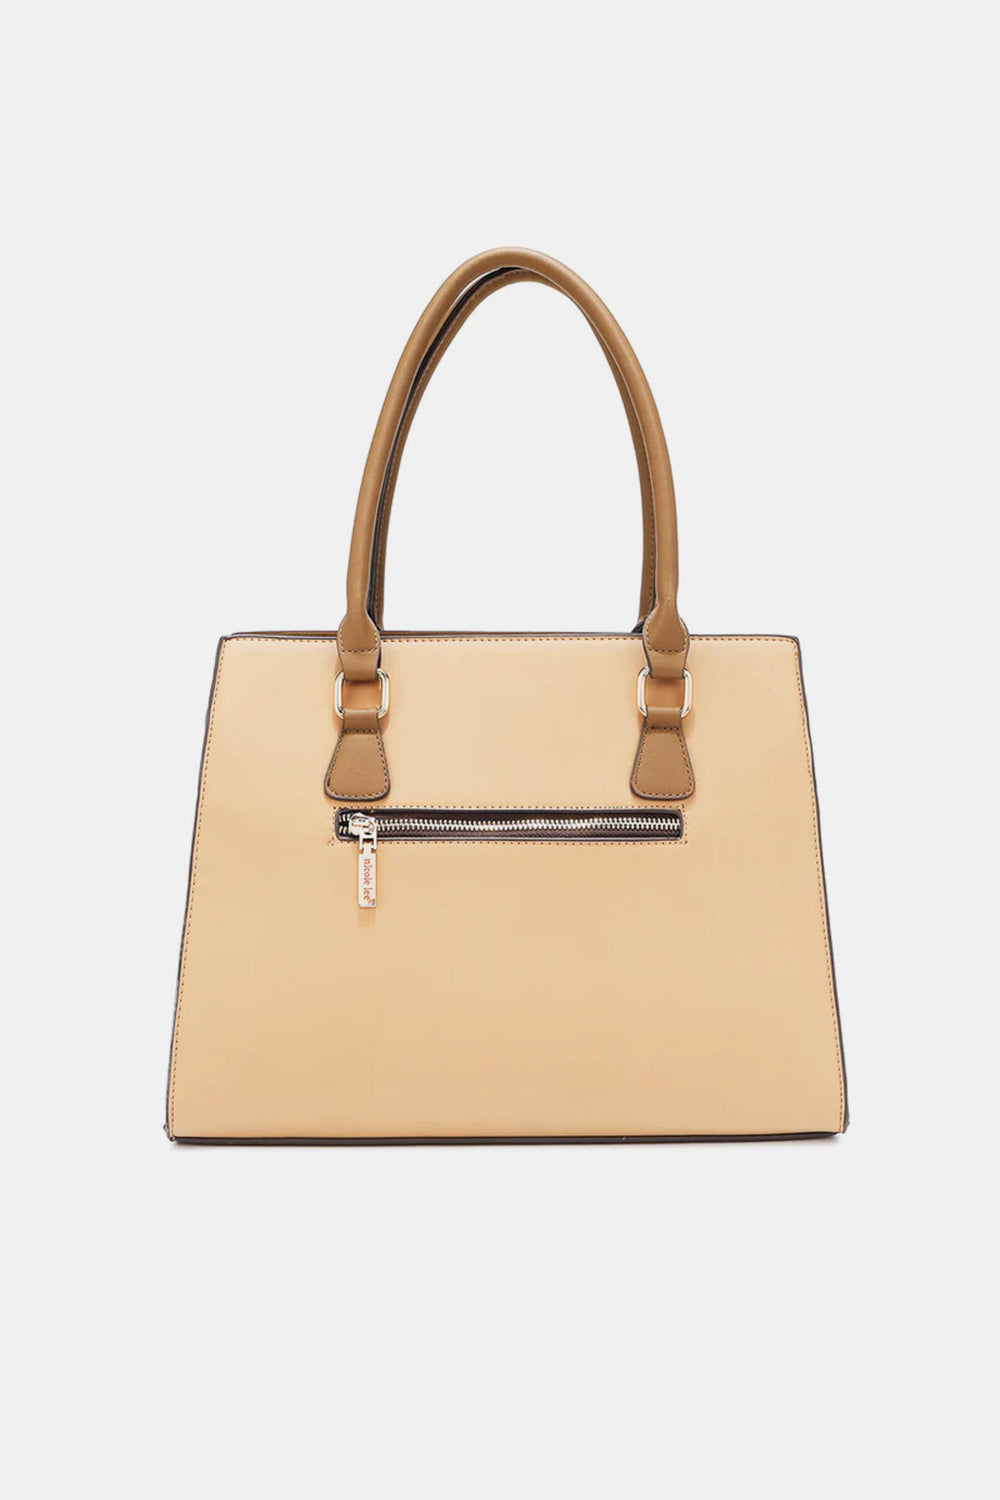 Beige Nicole Lee USA 3 Piece Handbag Set Sentient Beauty Fashions *Accessories